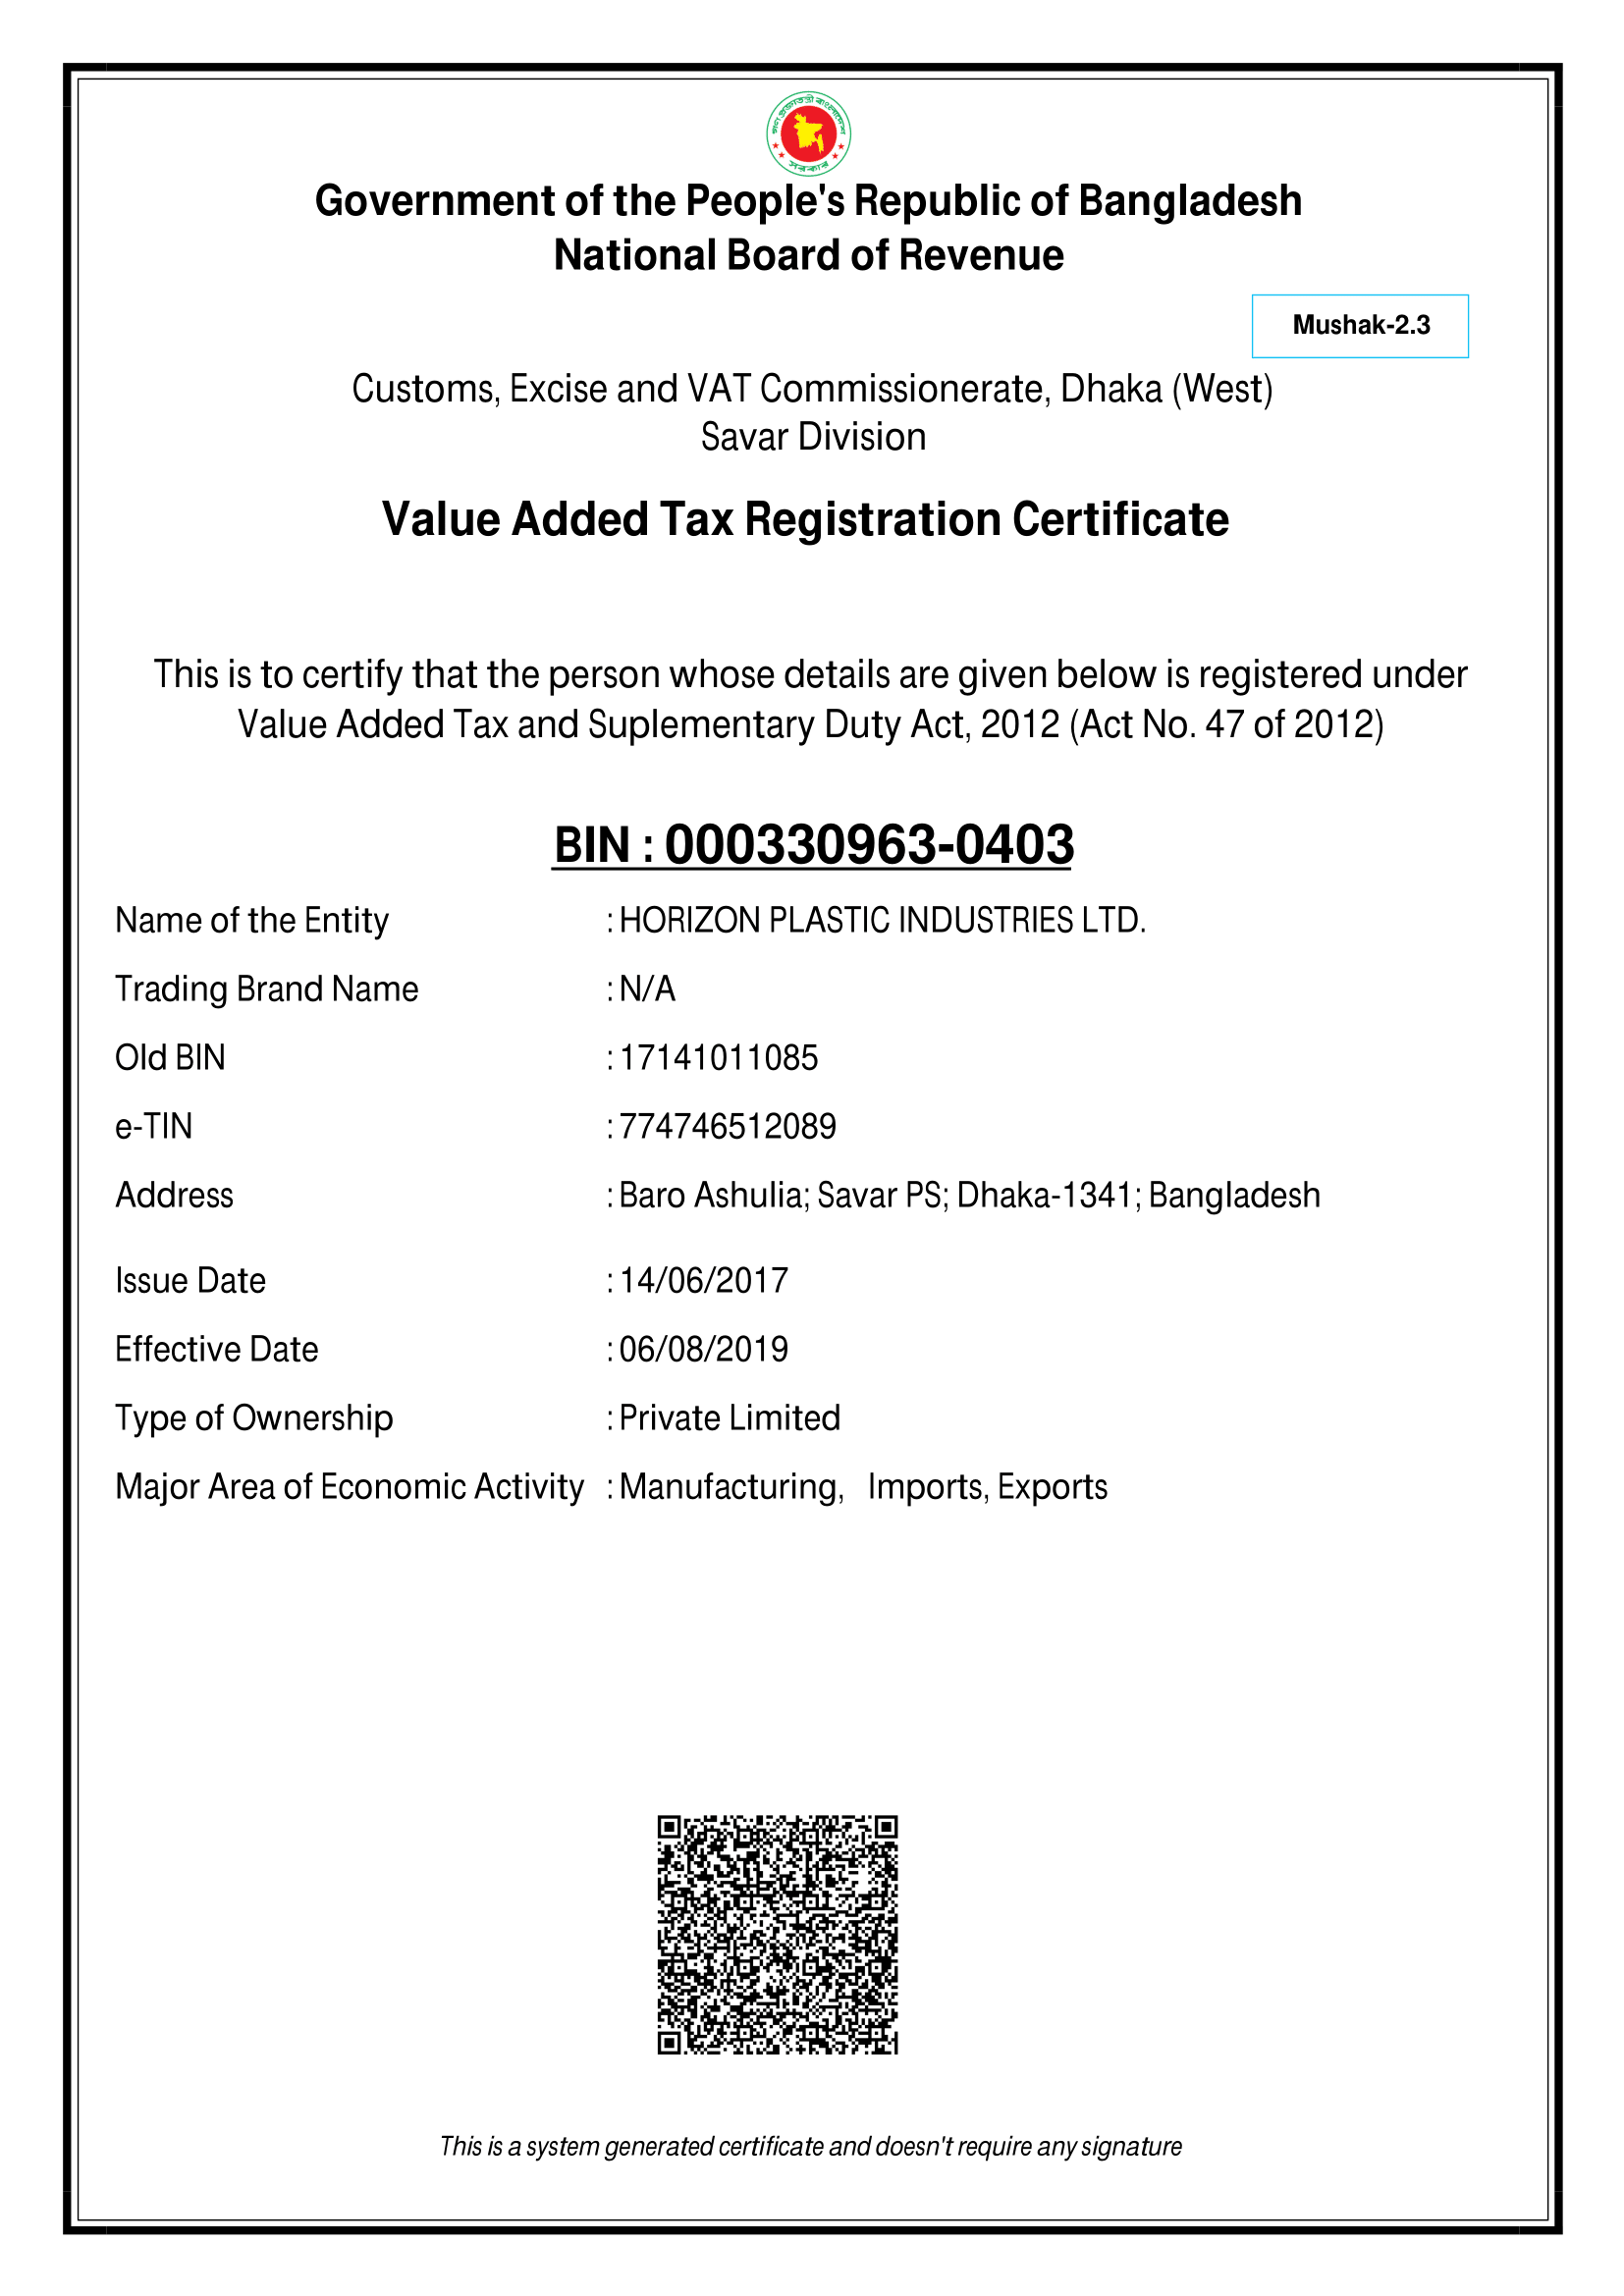 BIN Certificate-Horizon